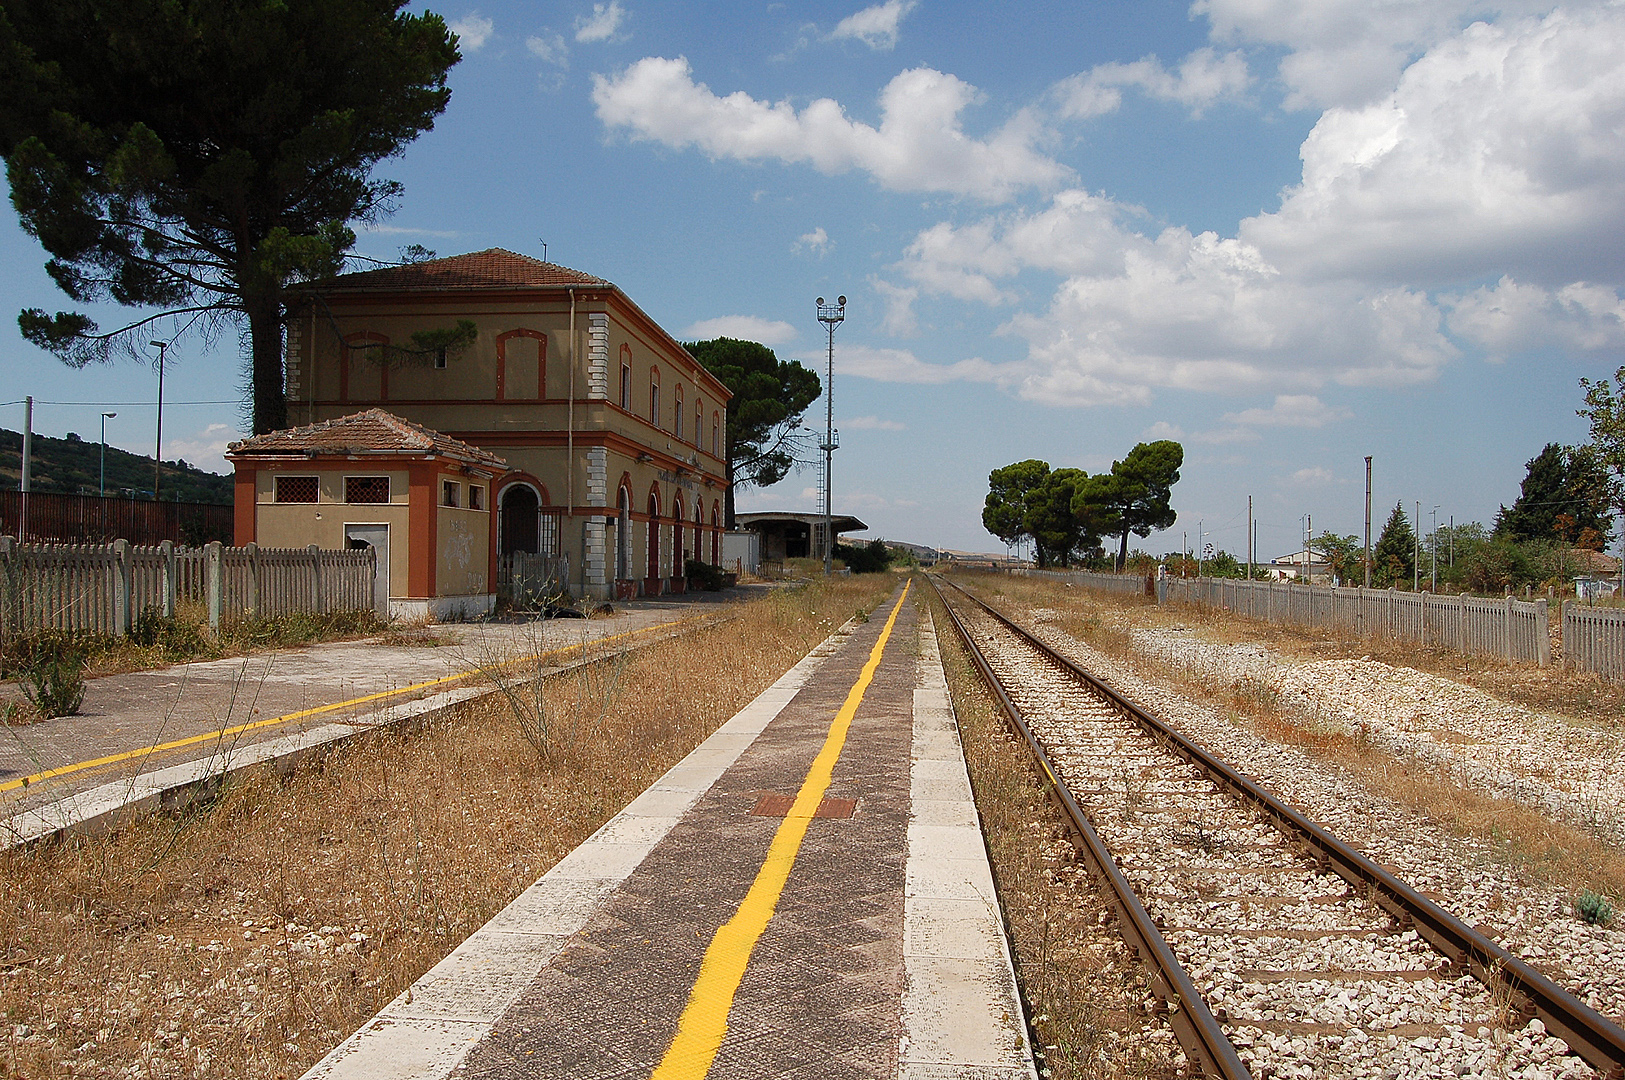 Verlaten spoorstation (Basilicata, Itali), Abandoned railway station (Basilicata, Italy)